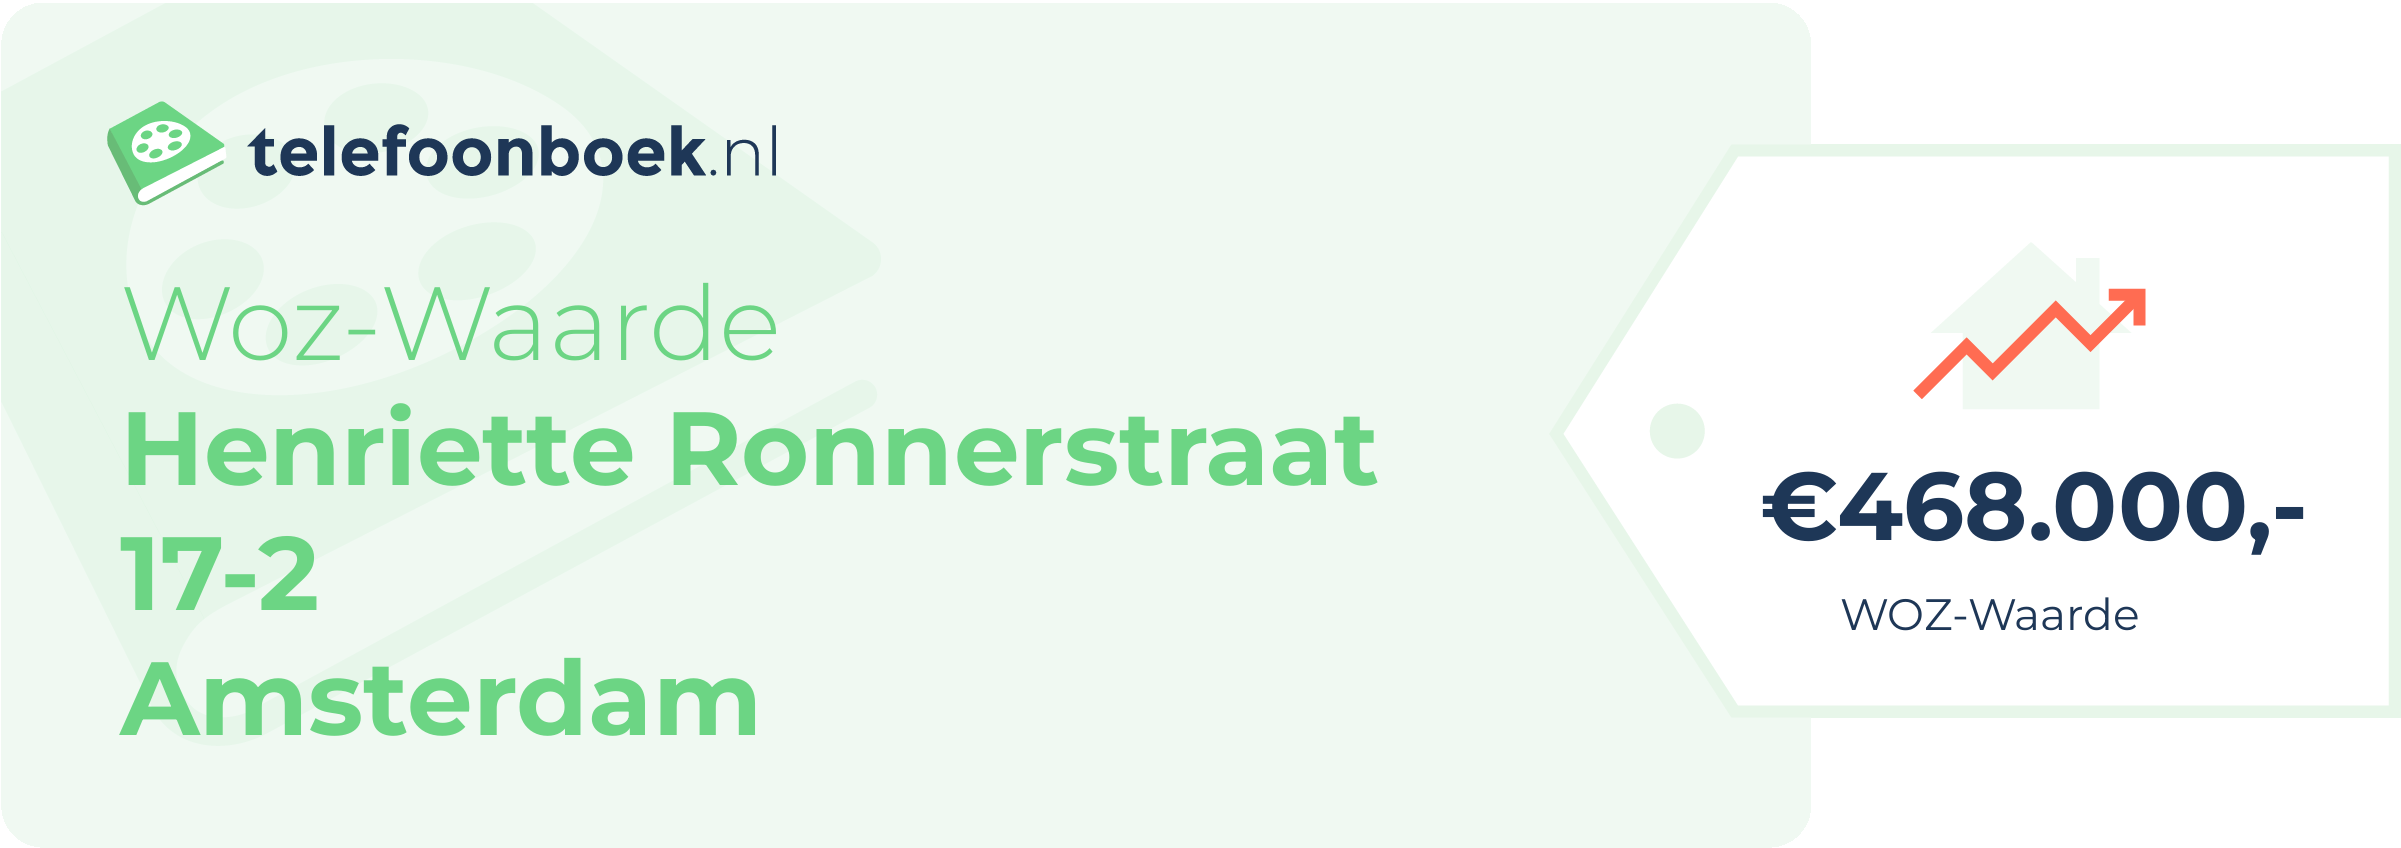 WOZ-waarde Henriette Ronnerstraat 17-2 Amsterdam